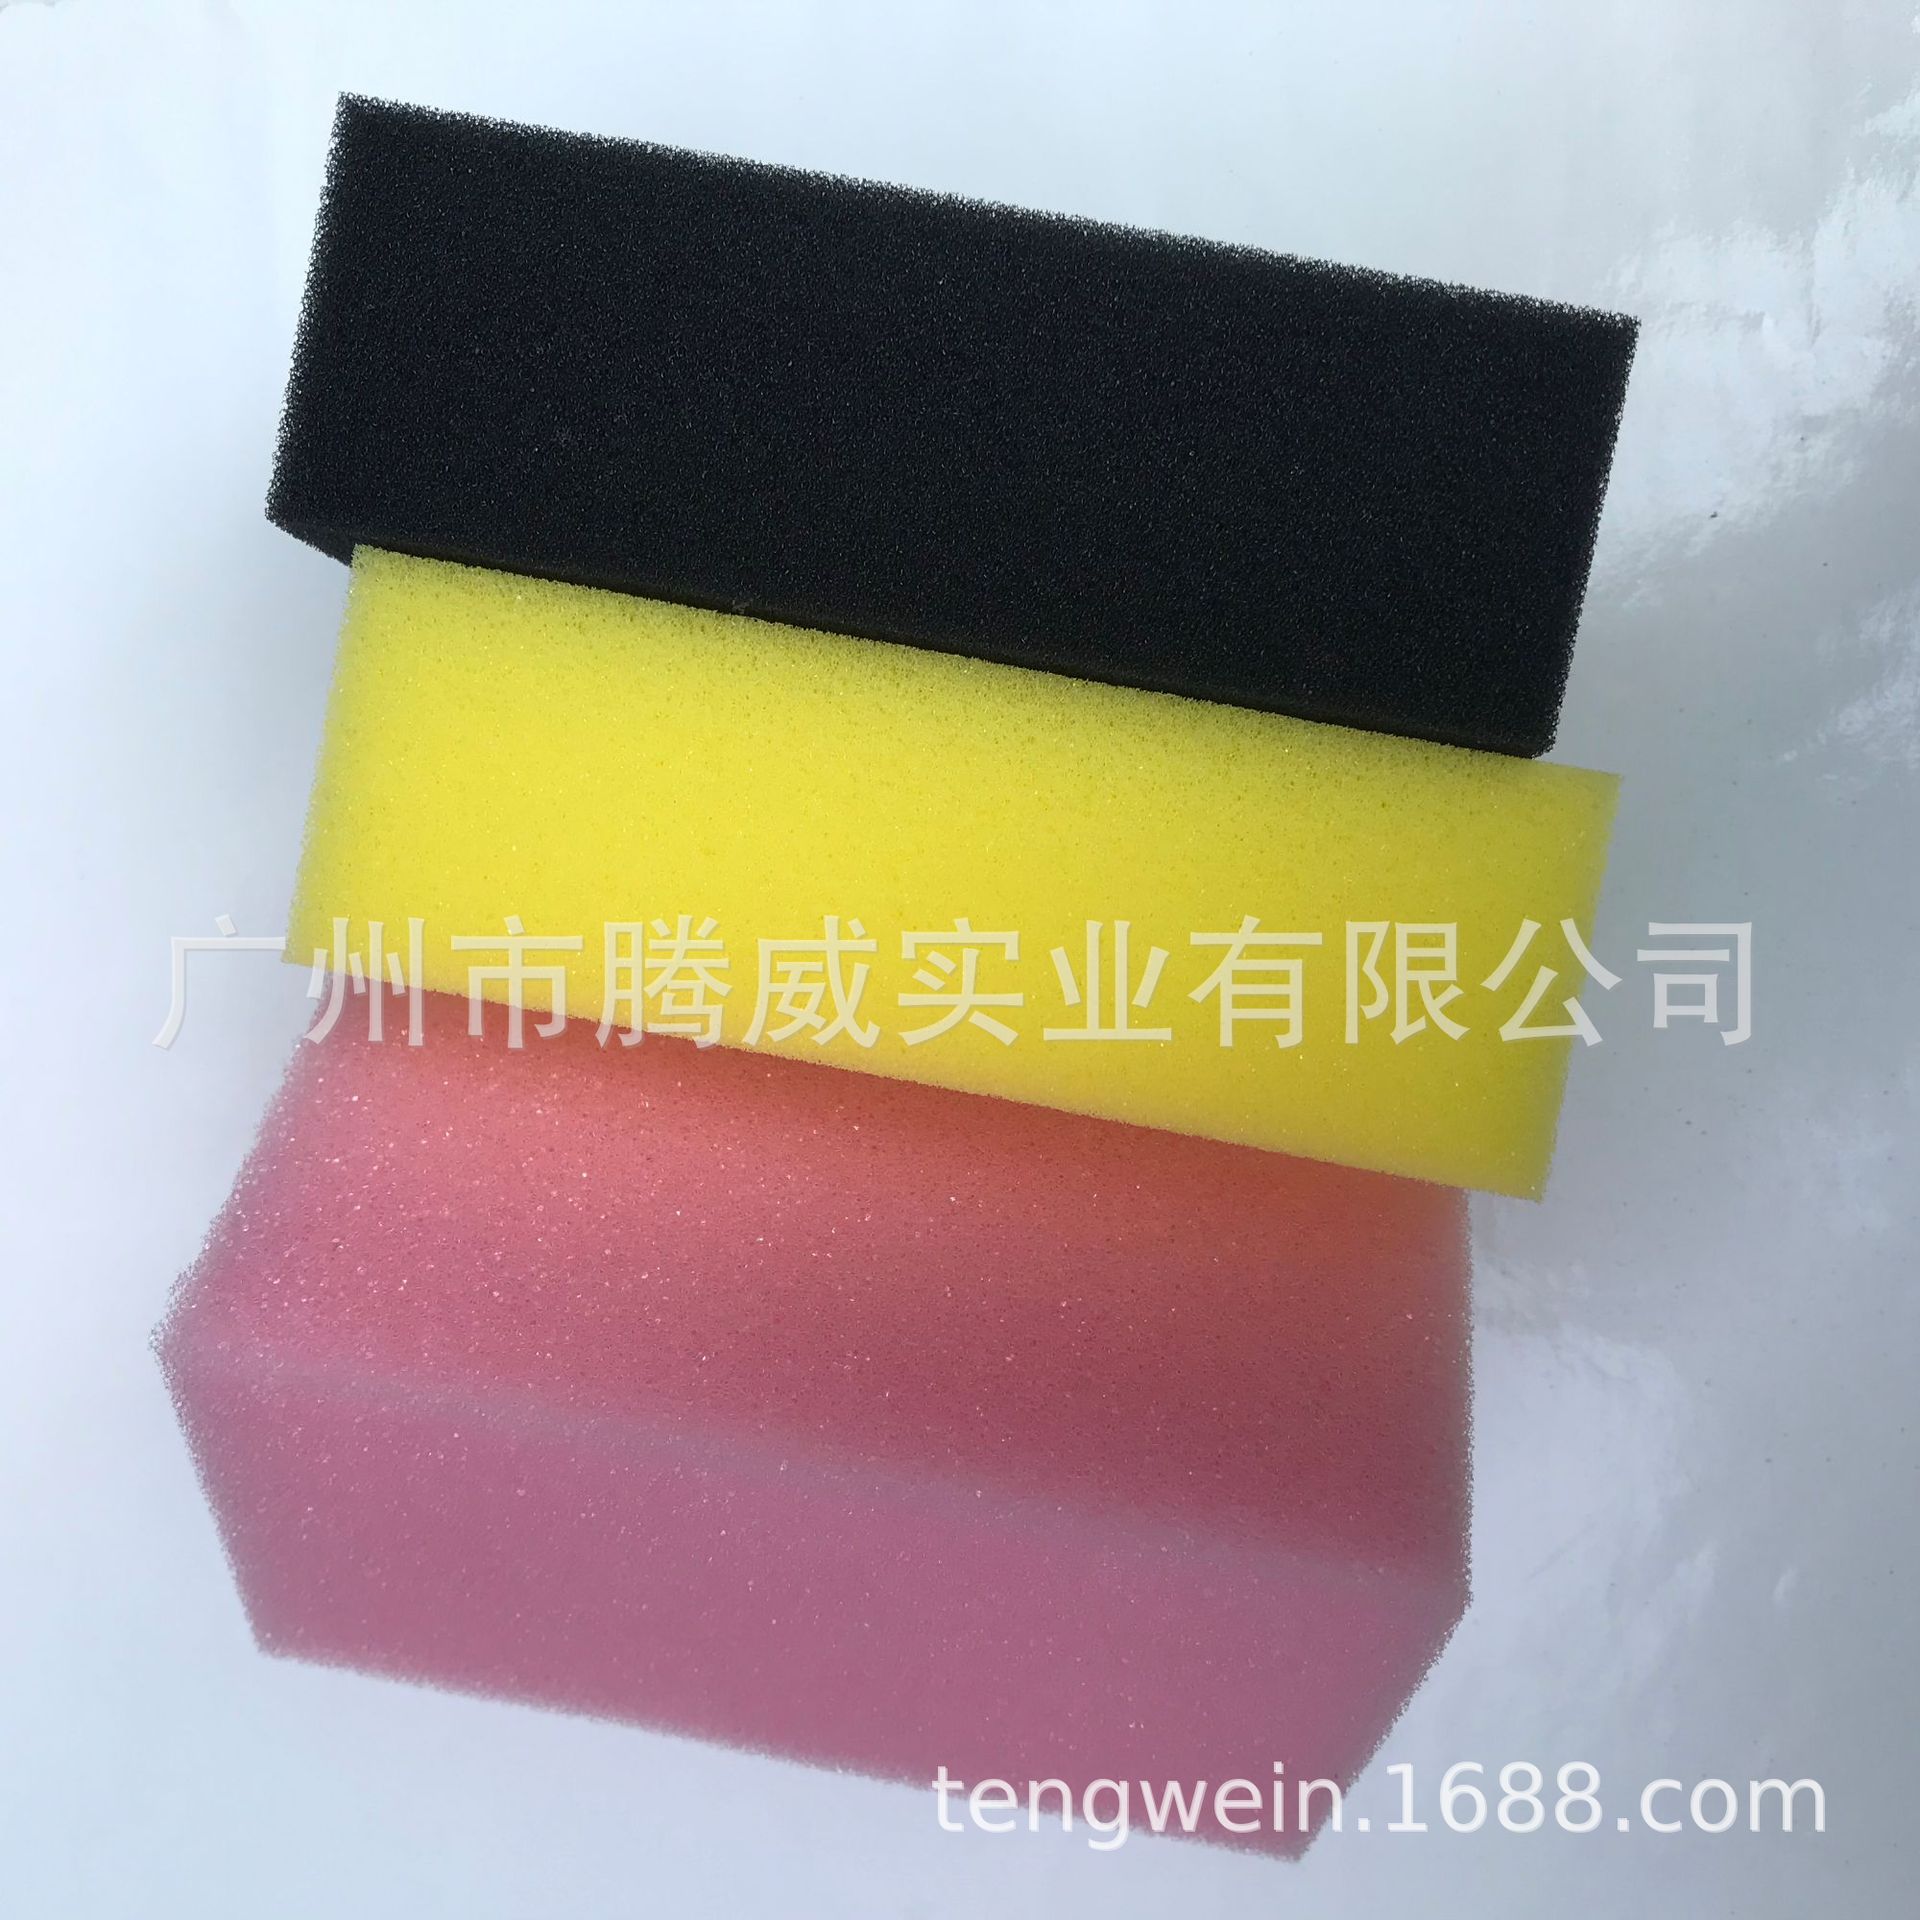 Teng Wei Manufactor motion cooling water uptake sponge Super Soft Skin-friendly High Density durable Haircut clean Sponge